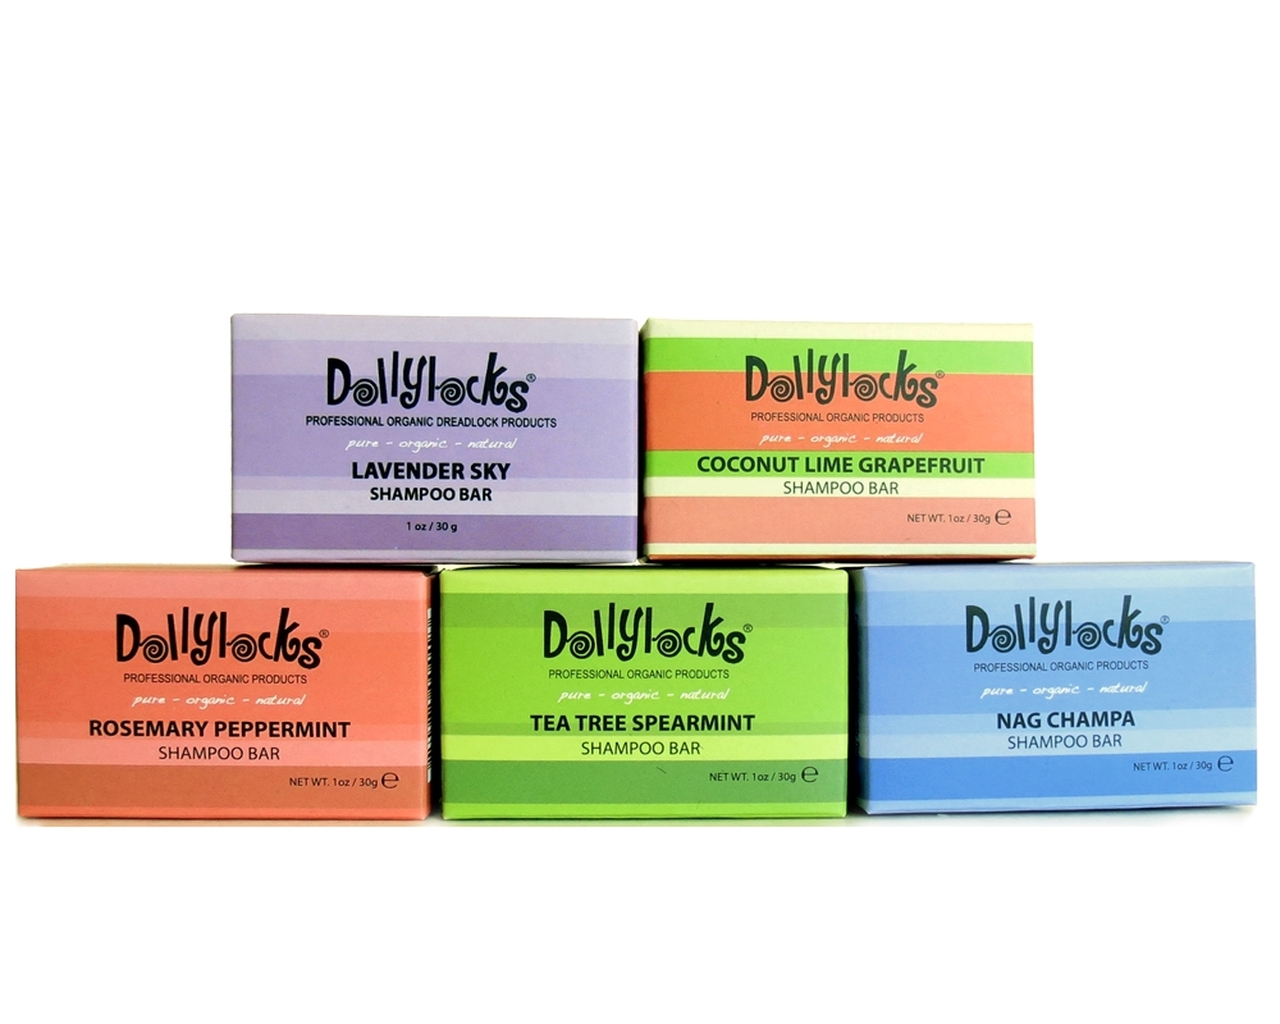 Dollylocks Travel size Shampoo Bar